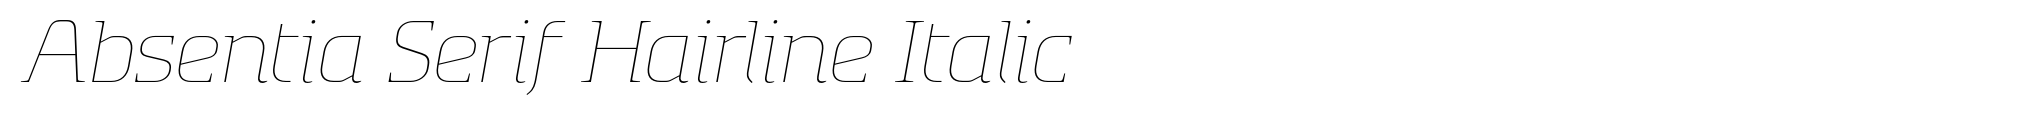 Absentia Serif Hairline Italic image